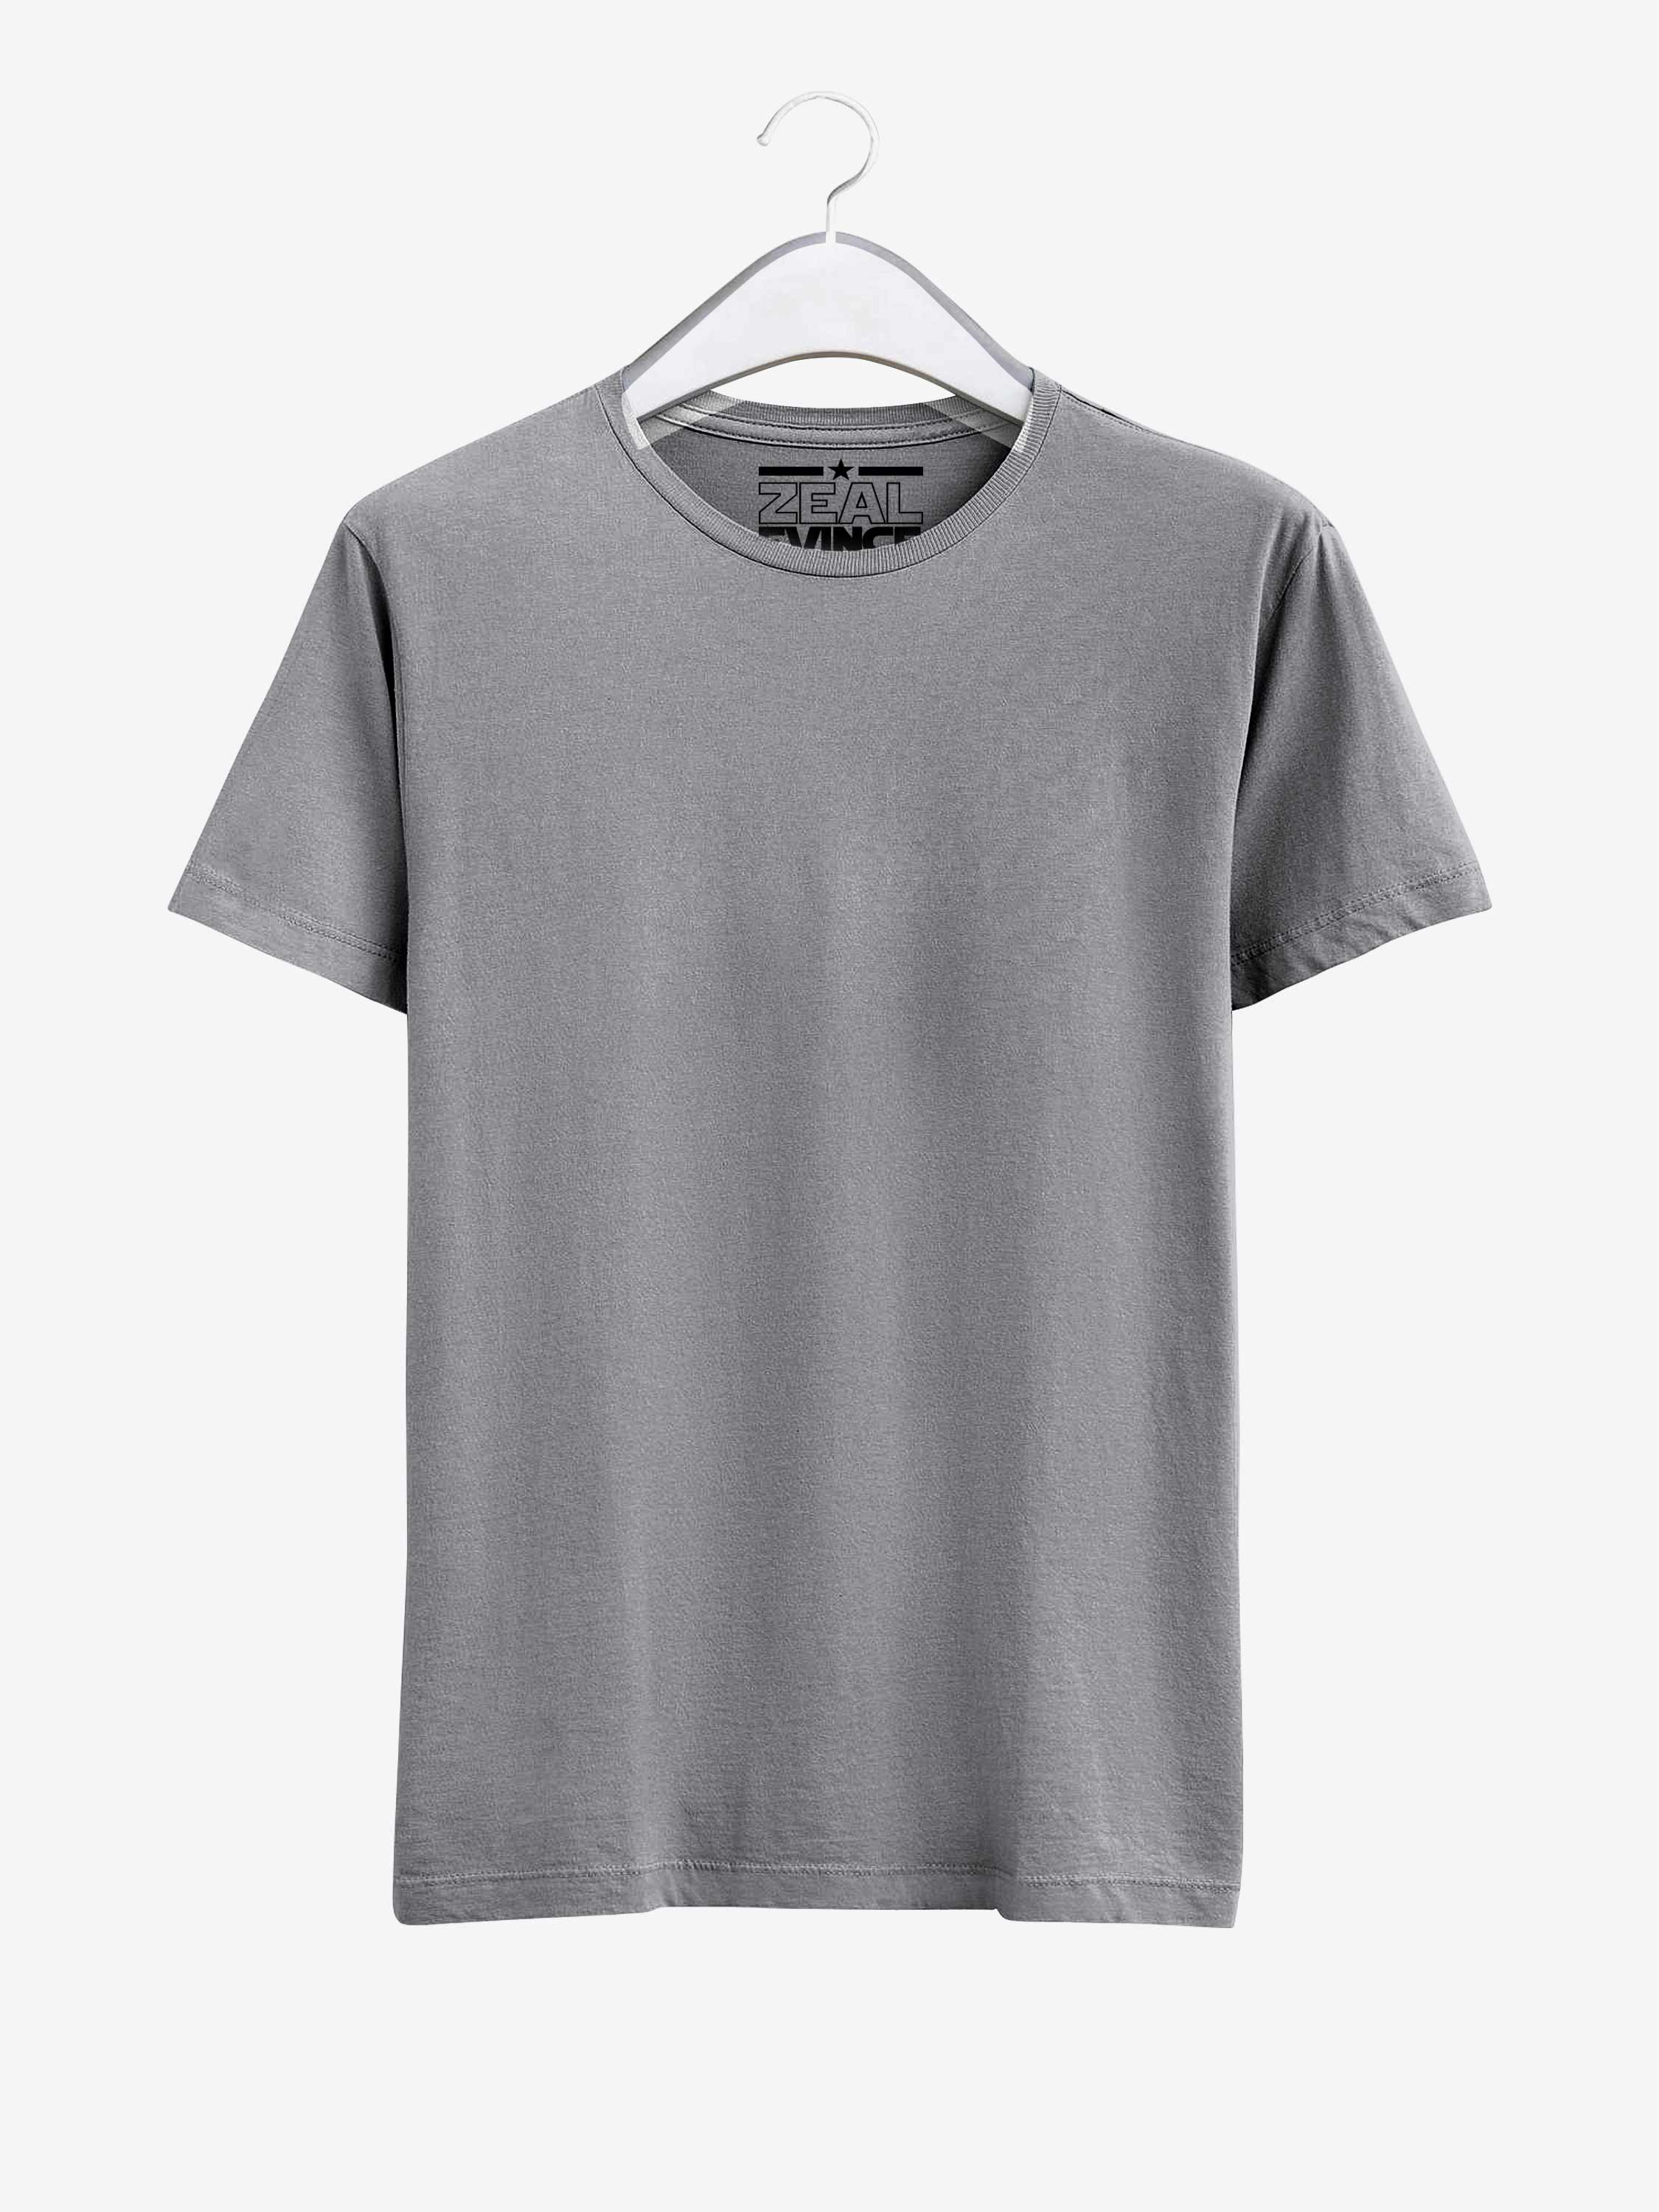 Plain Grey T Shirt — Zeal Evince 